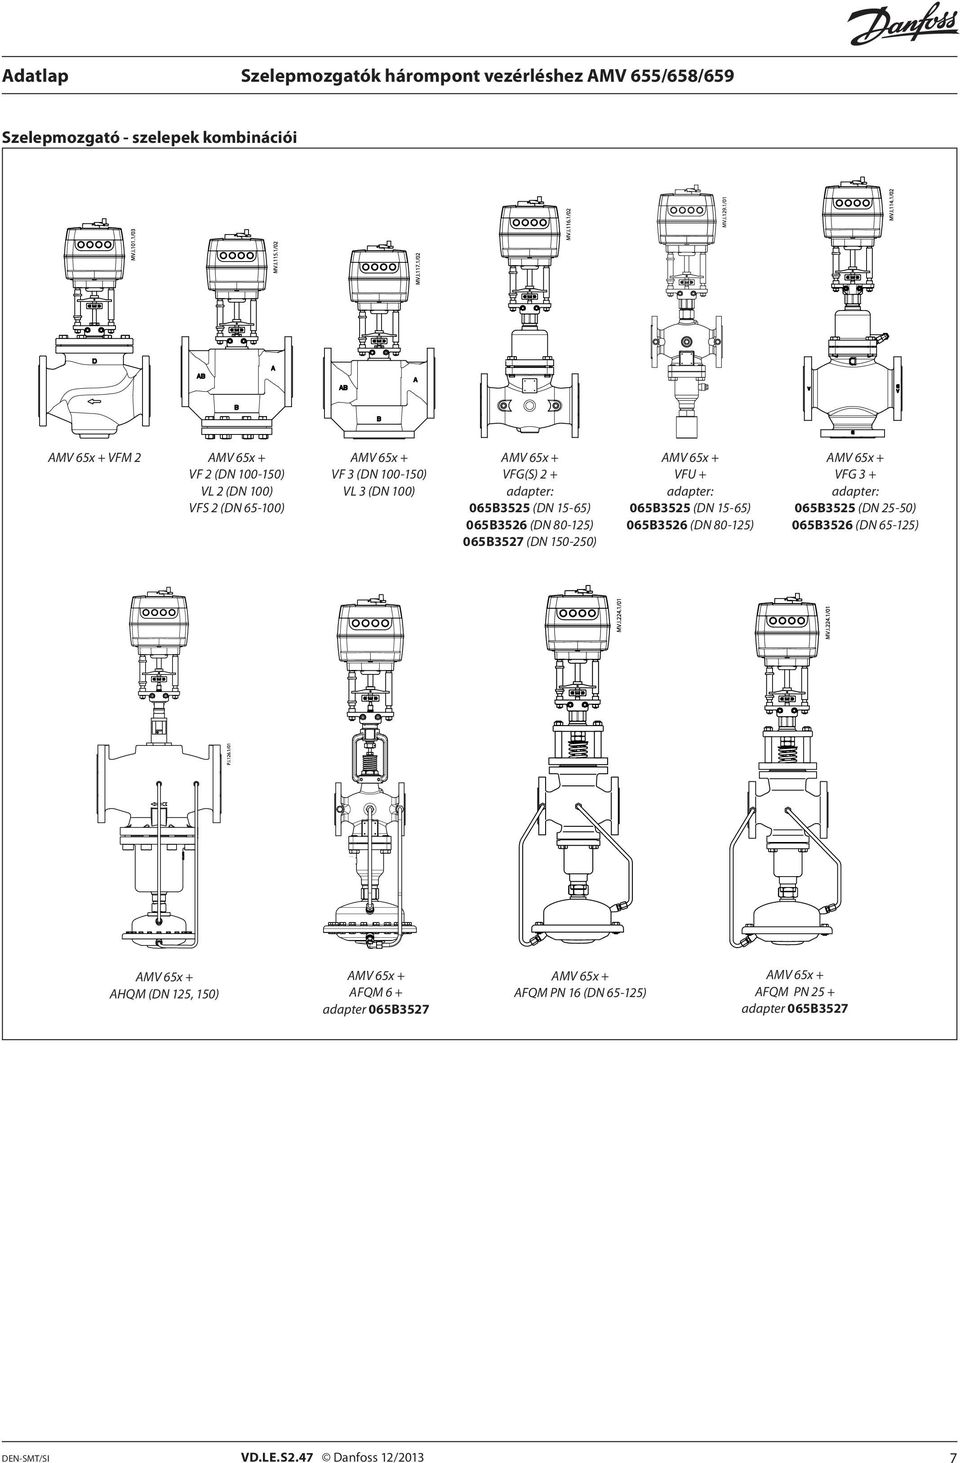 50-250) VFU + adapter: 065B525 (DN 5-65) 065B526 (DN 80-25) VFG + adapter: 065B525 (DN 25-50) 065B526 (DN 65-25) AHQM